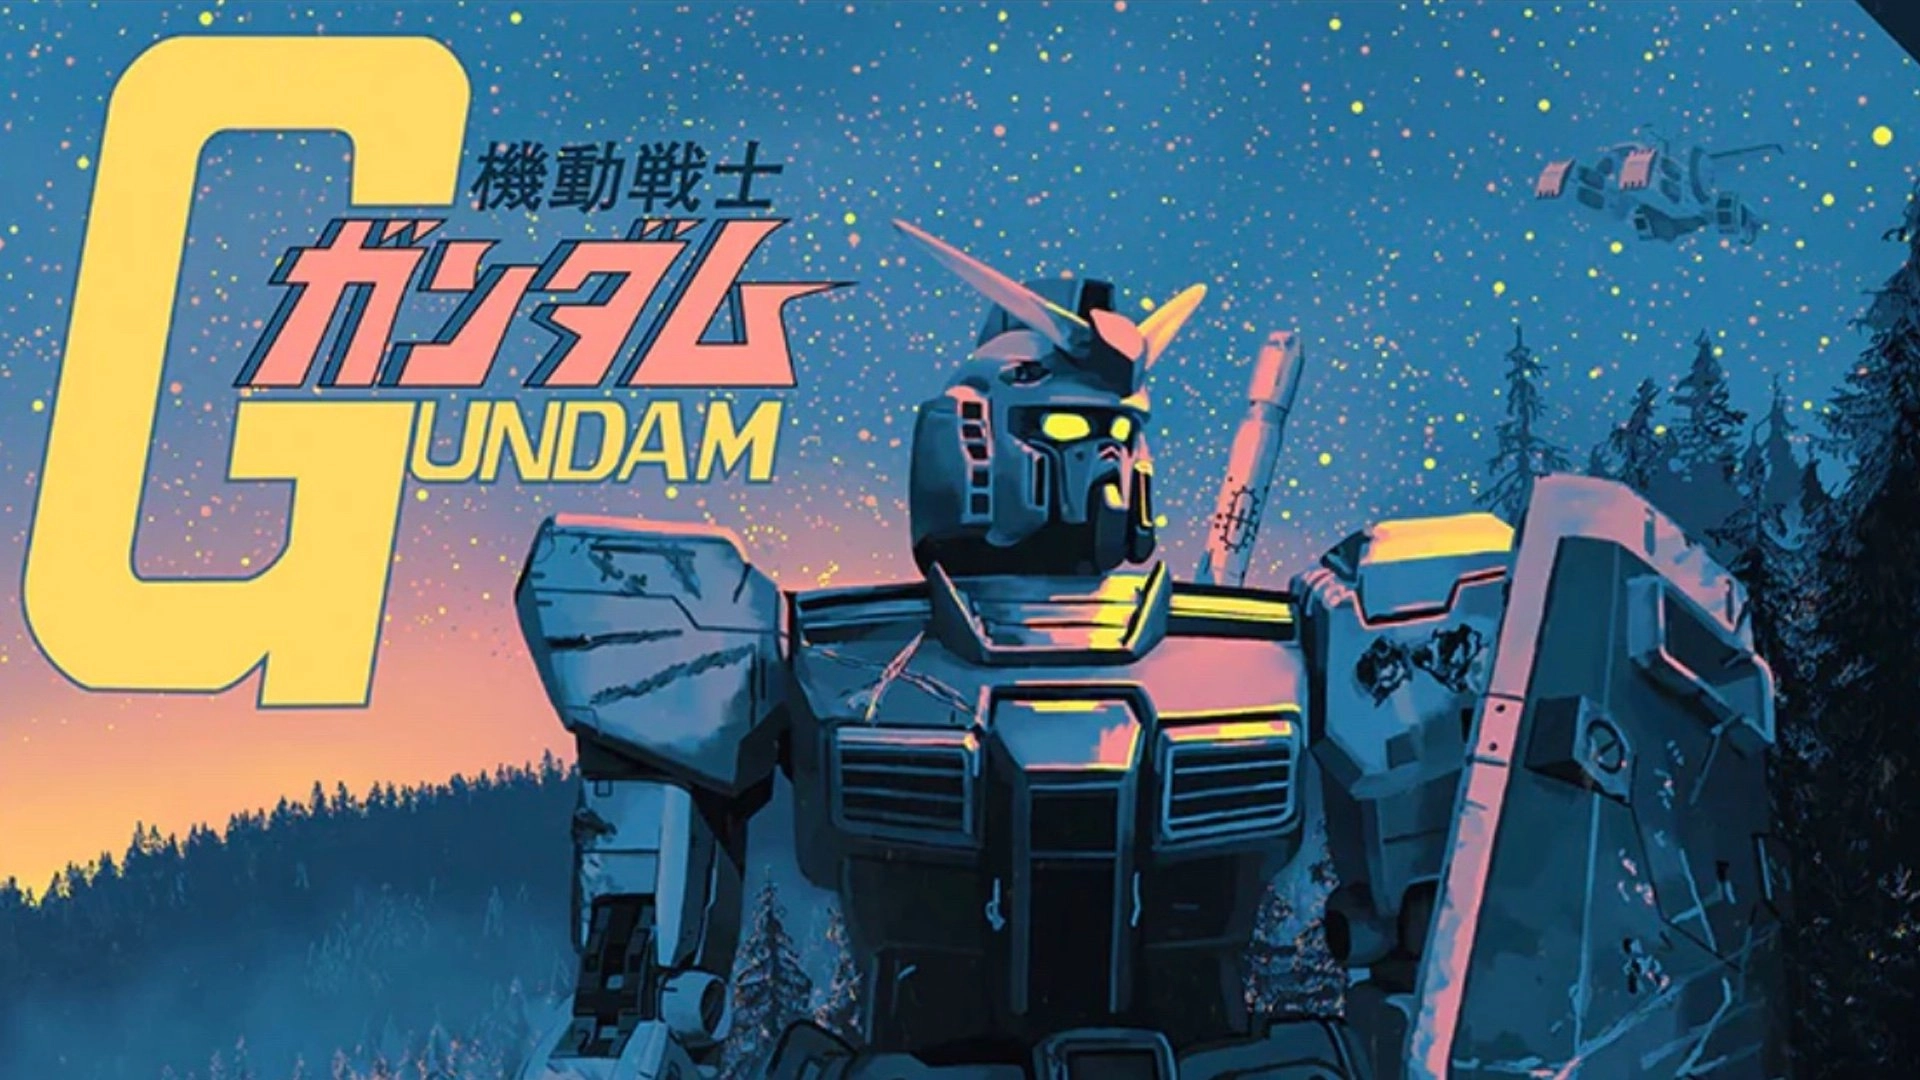 Cómo ver Gundam en orden: Una guía para entrar a esta saga - Coanime.net